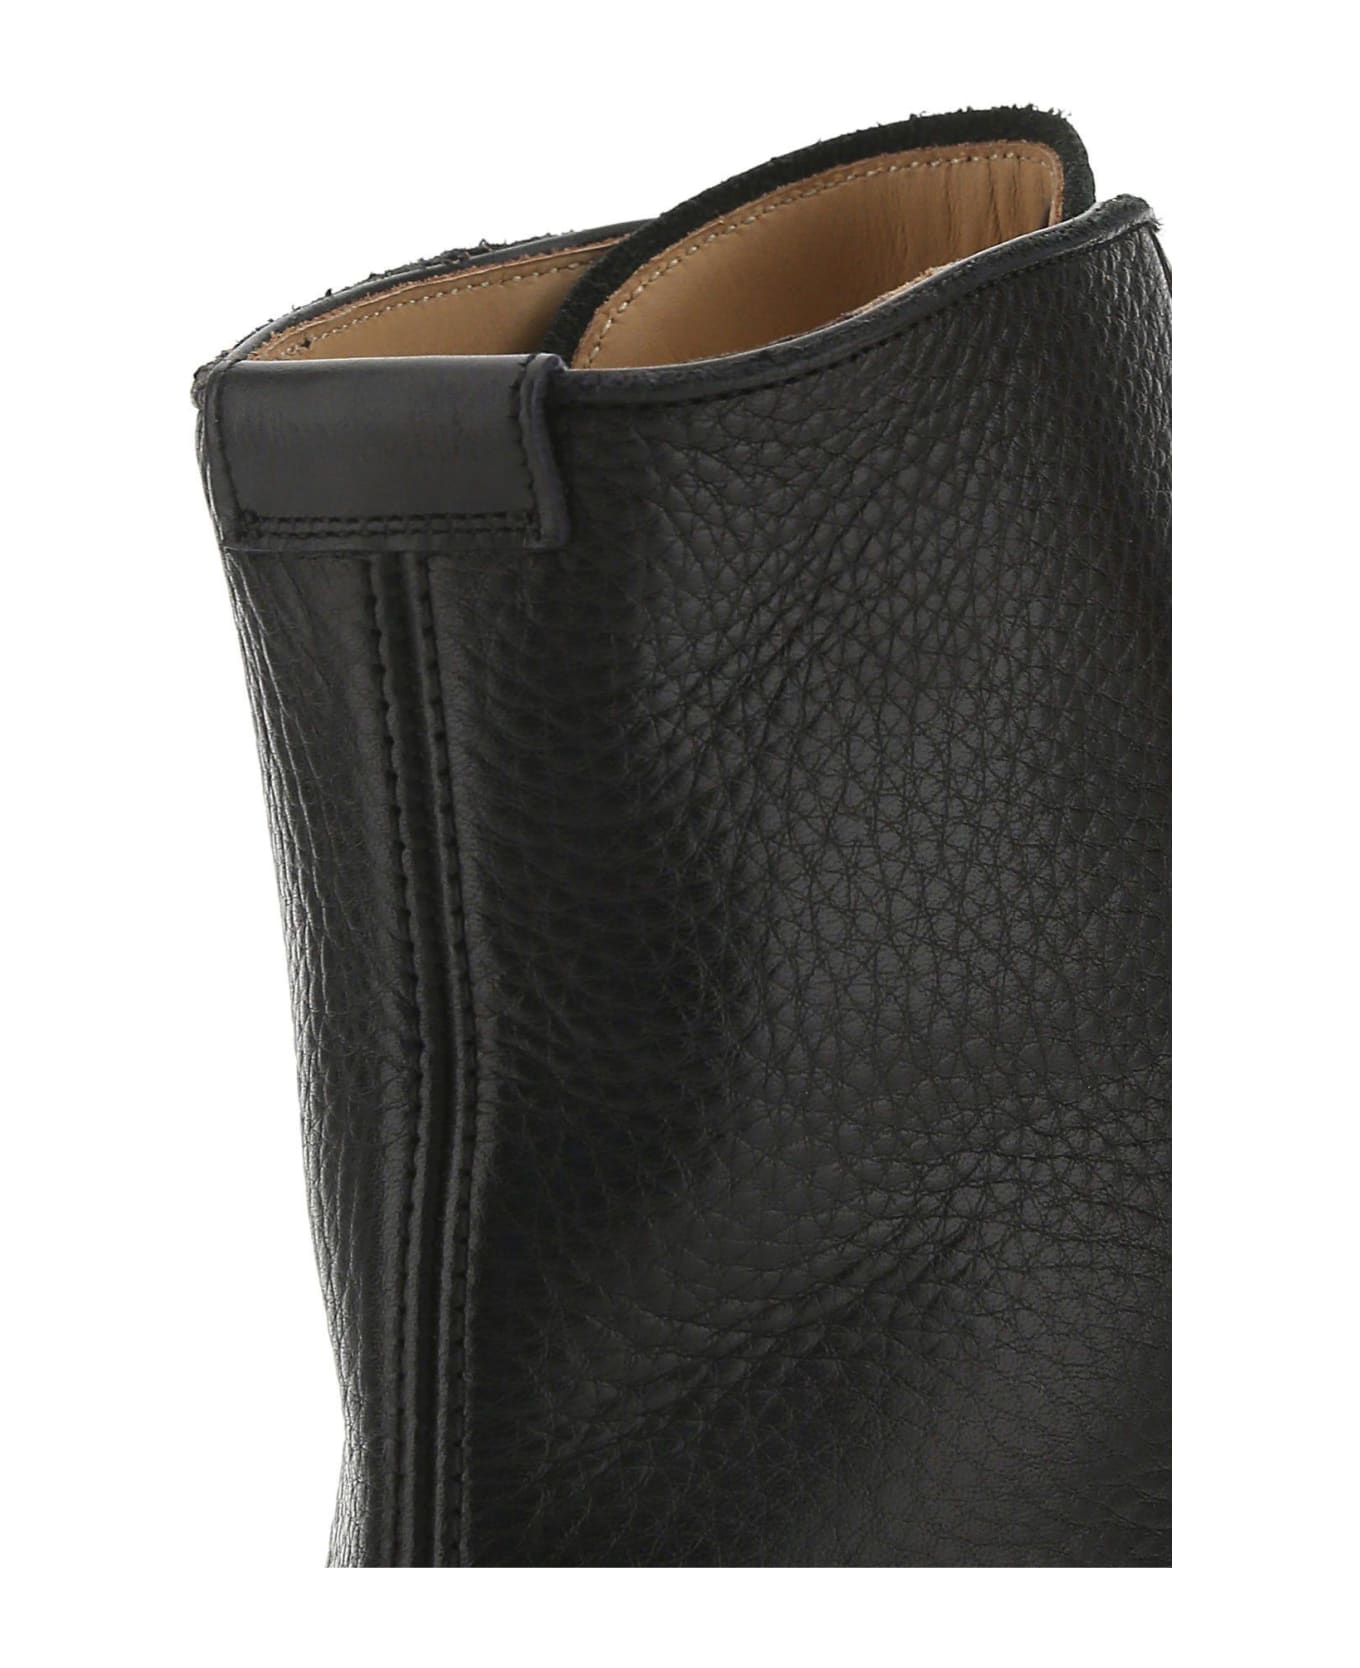 Church's Black Leather Coalport 2 Ankle Boots - Nero ブーツ